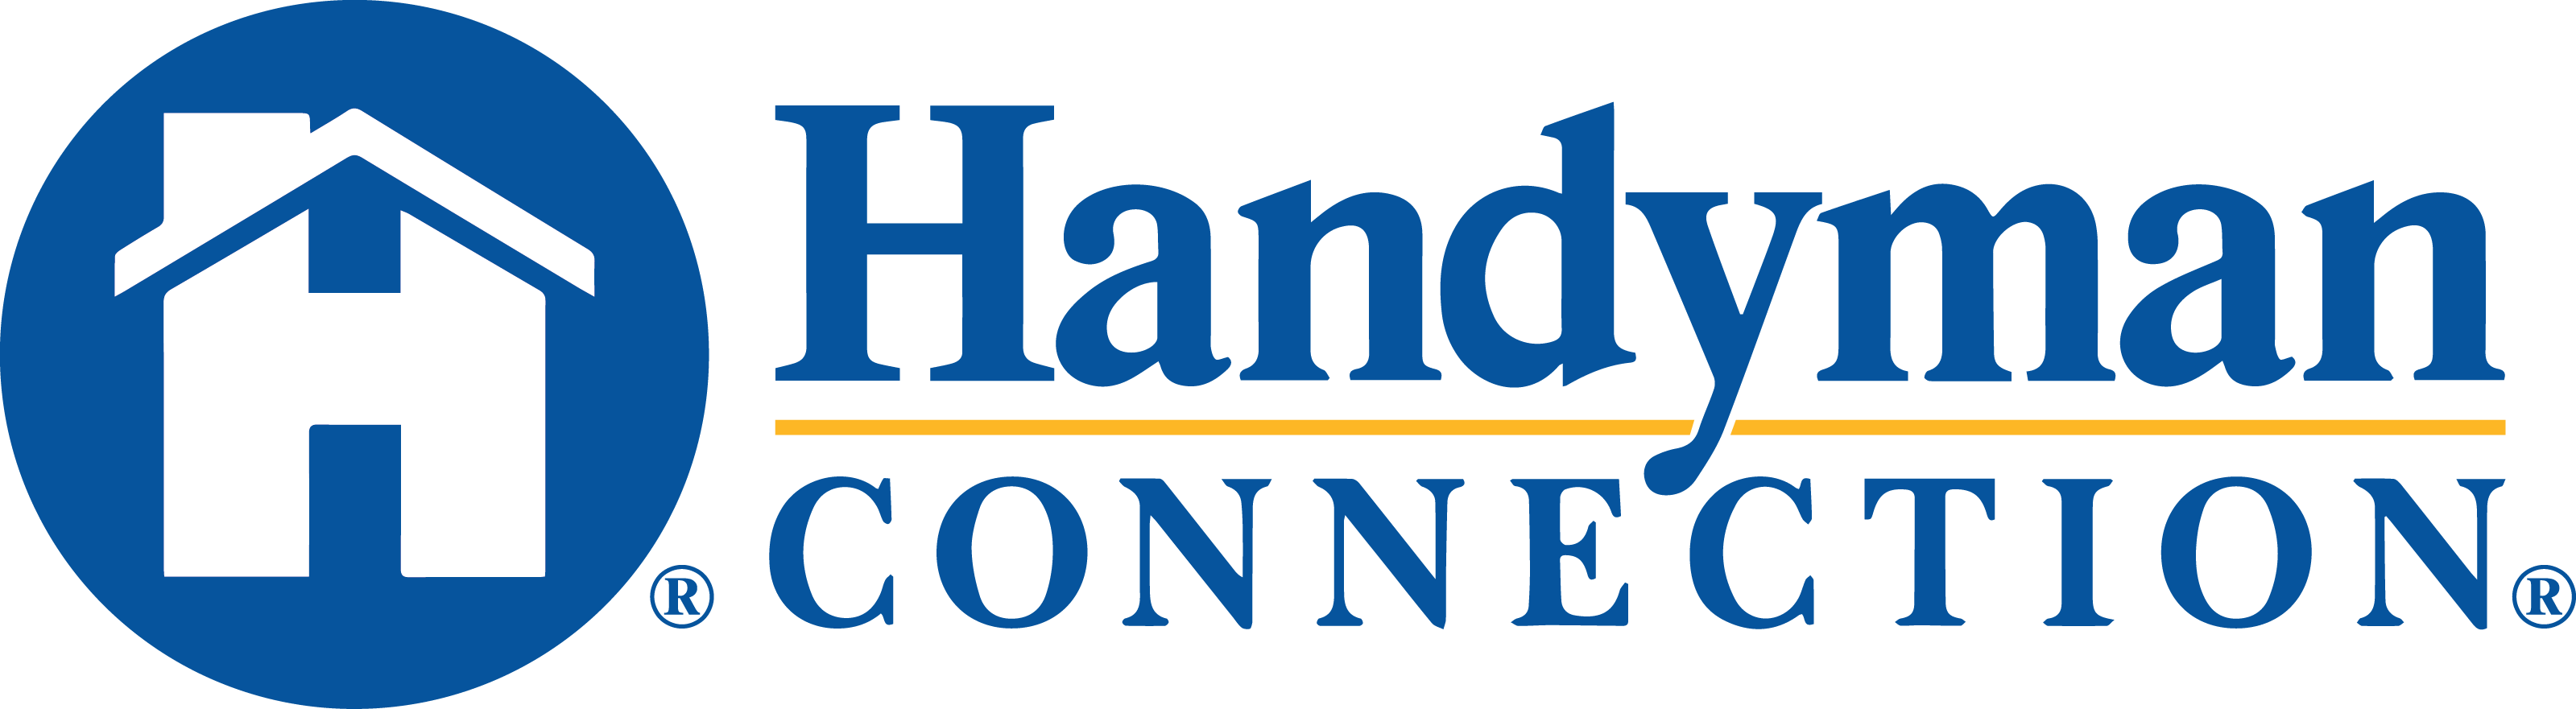 https://handymanconnection.com/colorado-springs/wp-content/uploads/sites/5/2021/05/HandymanConnection-logo-2.png